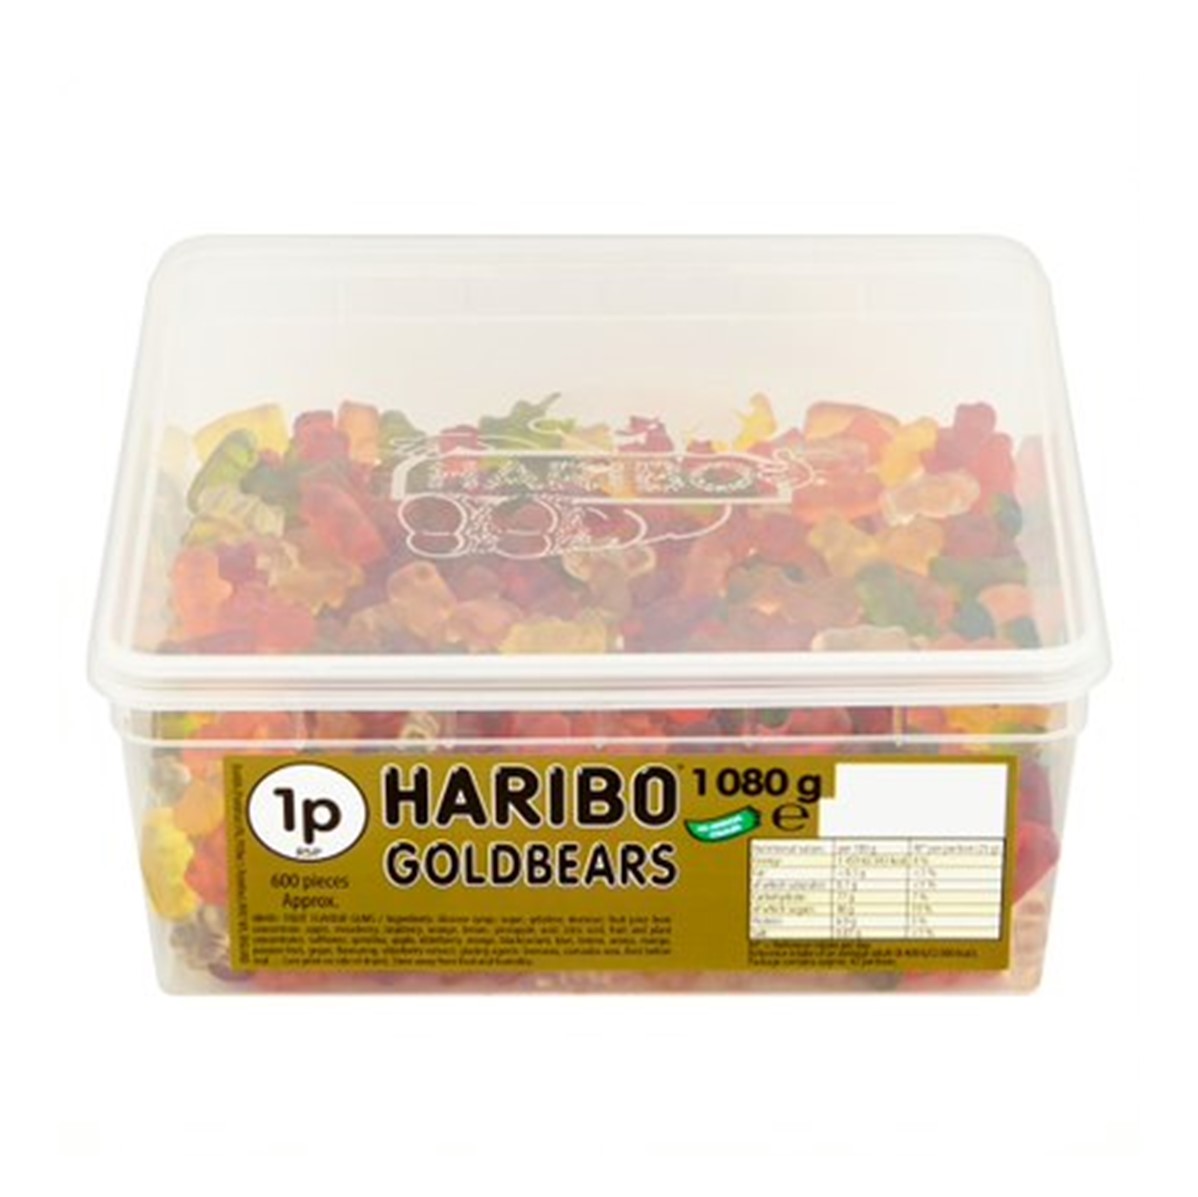 Haribo Gold Gummi Bears - 1.08kg tub [c.600 bears]